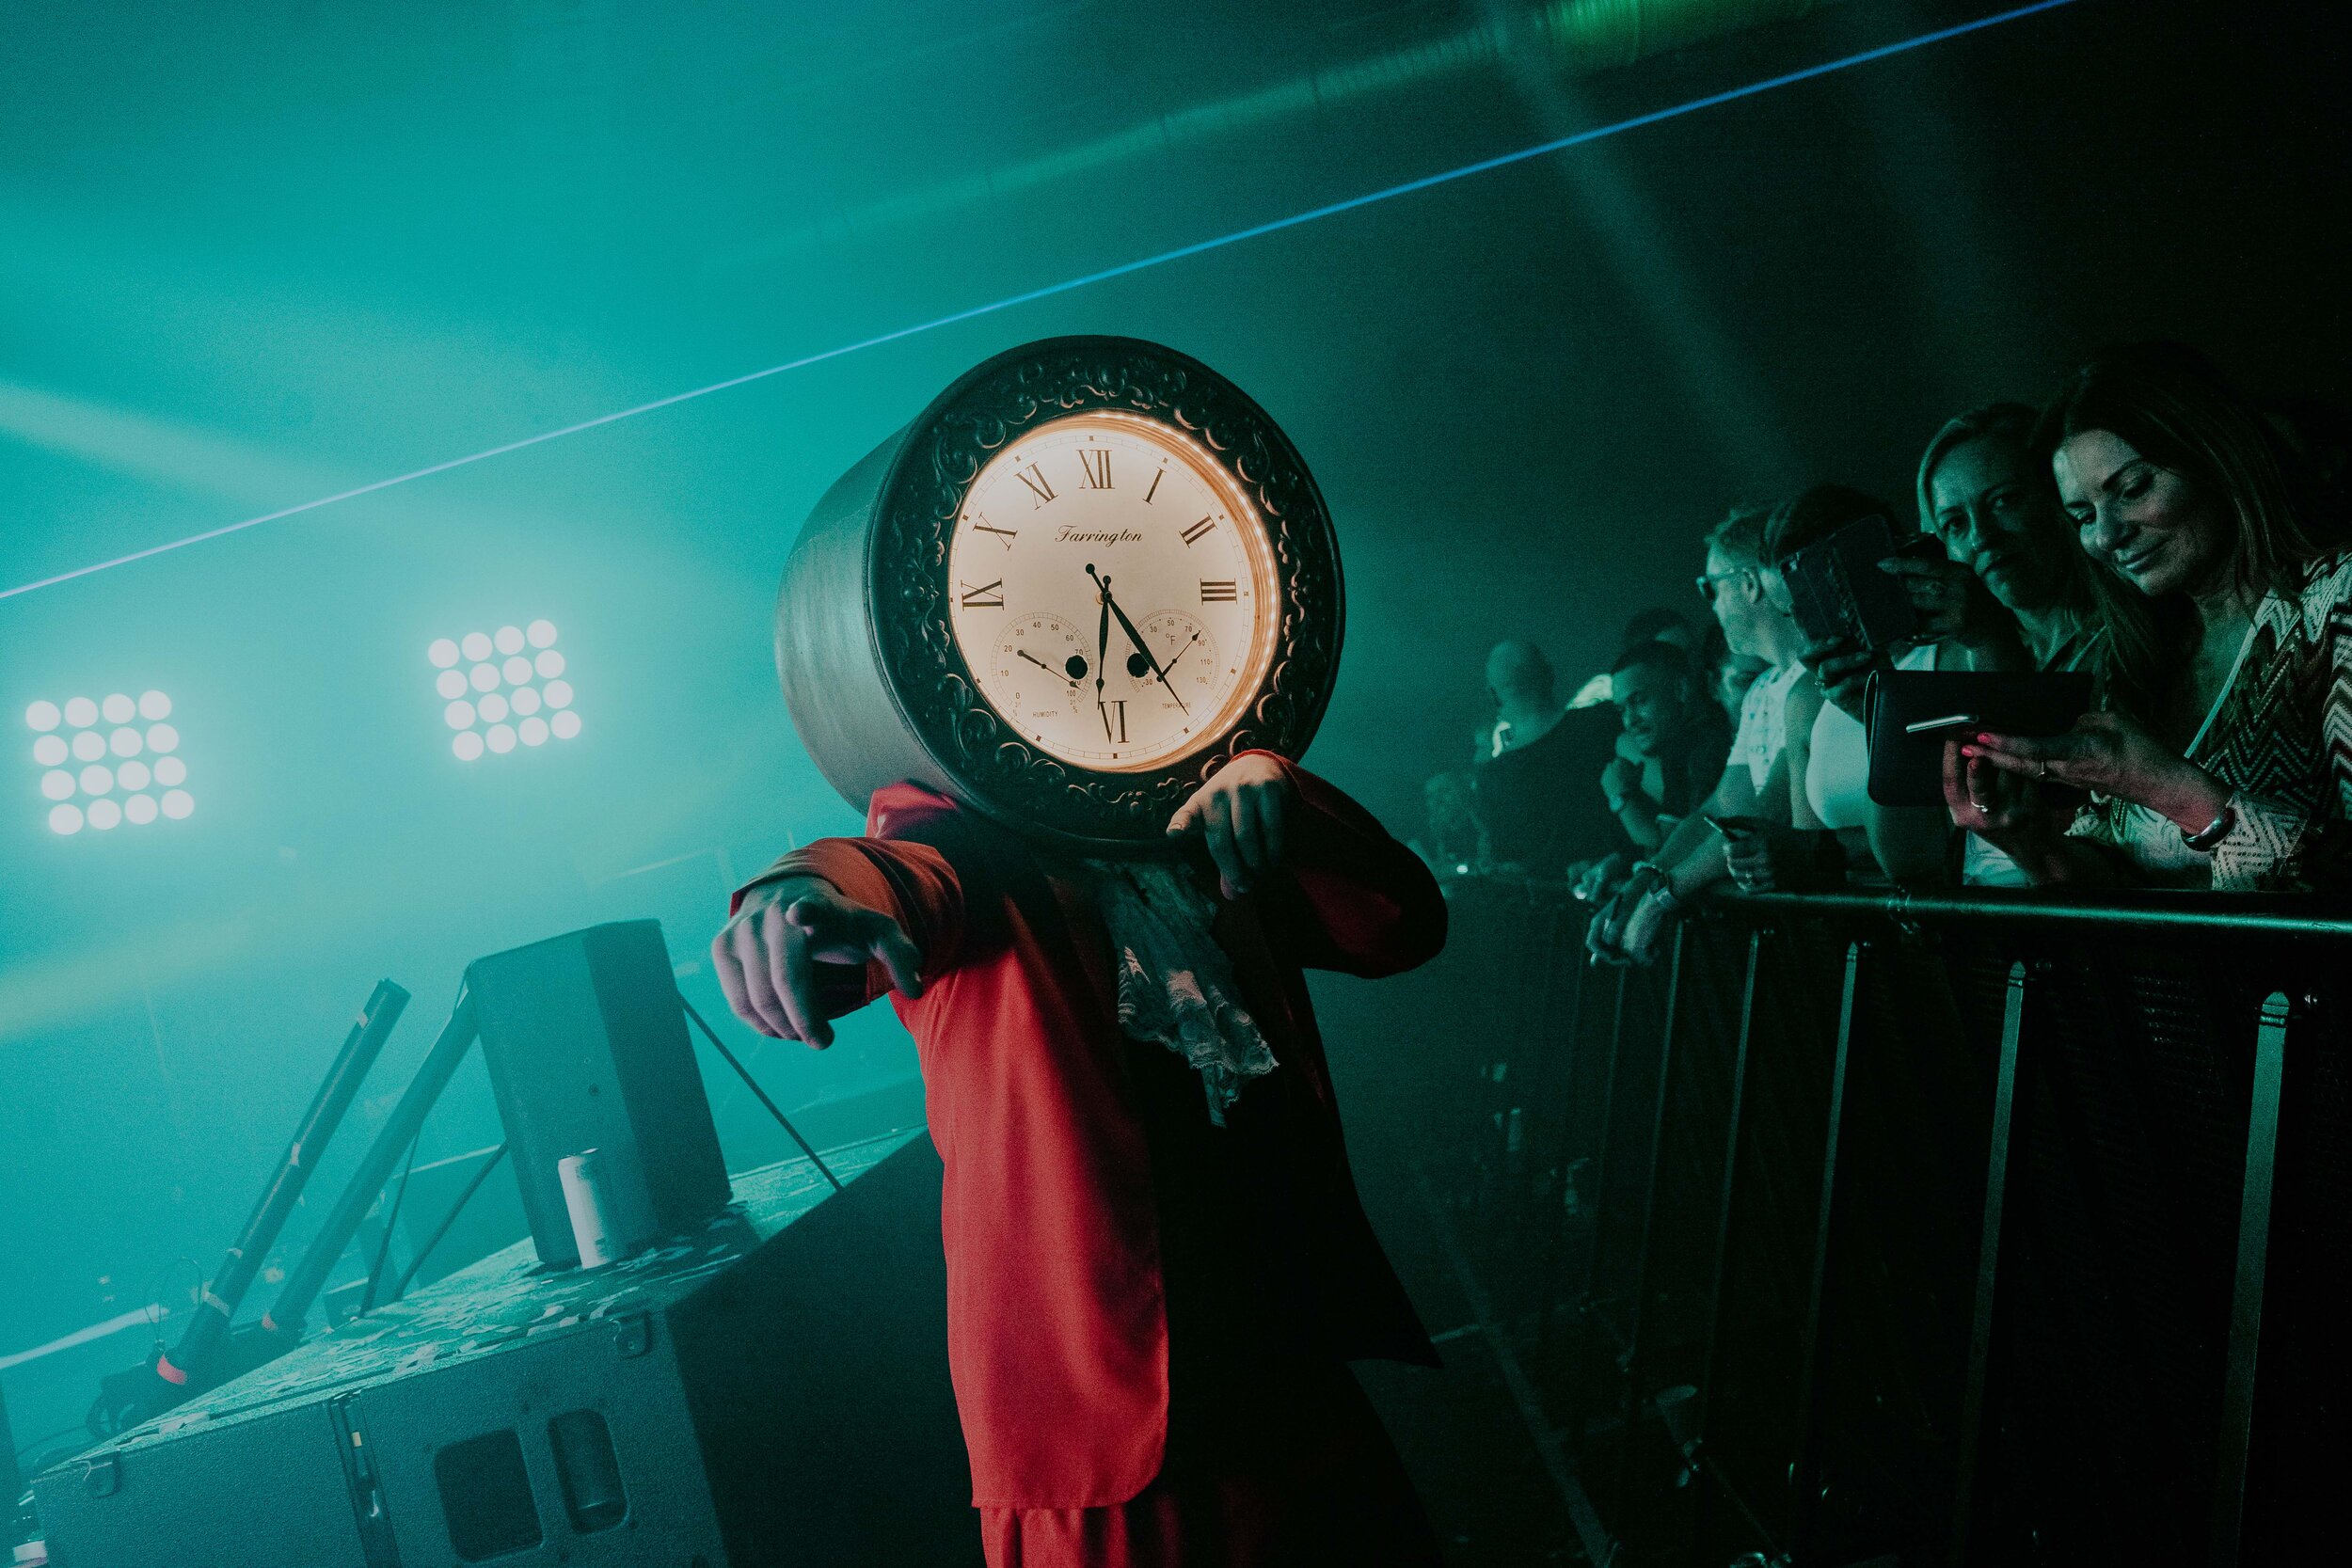 Clock Heads performer